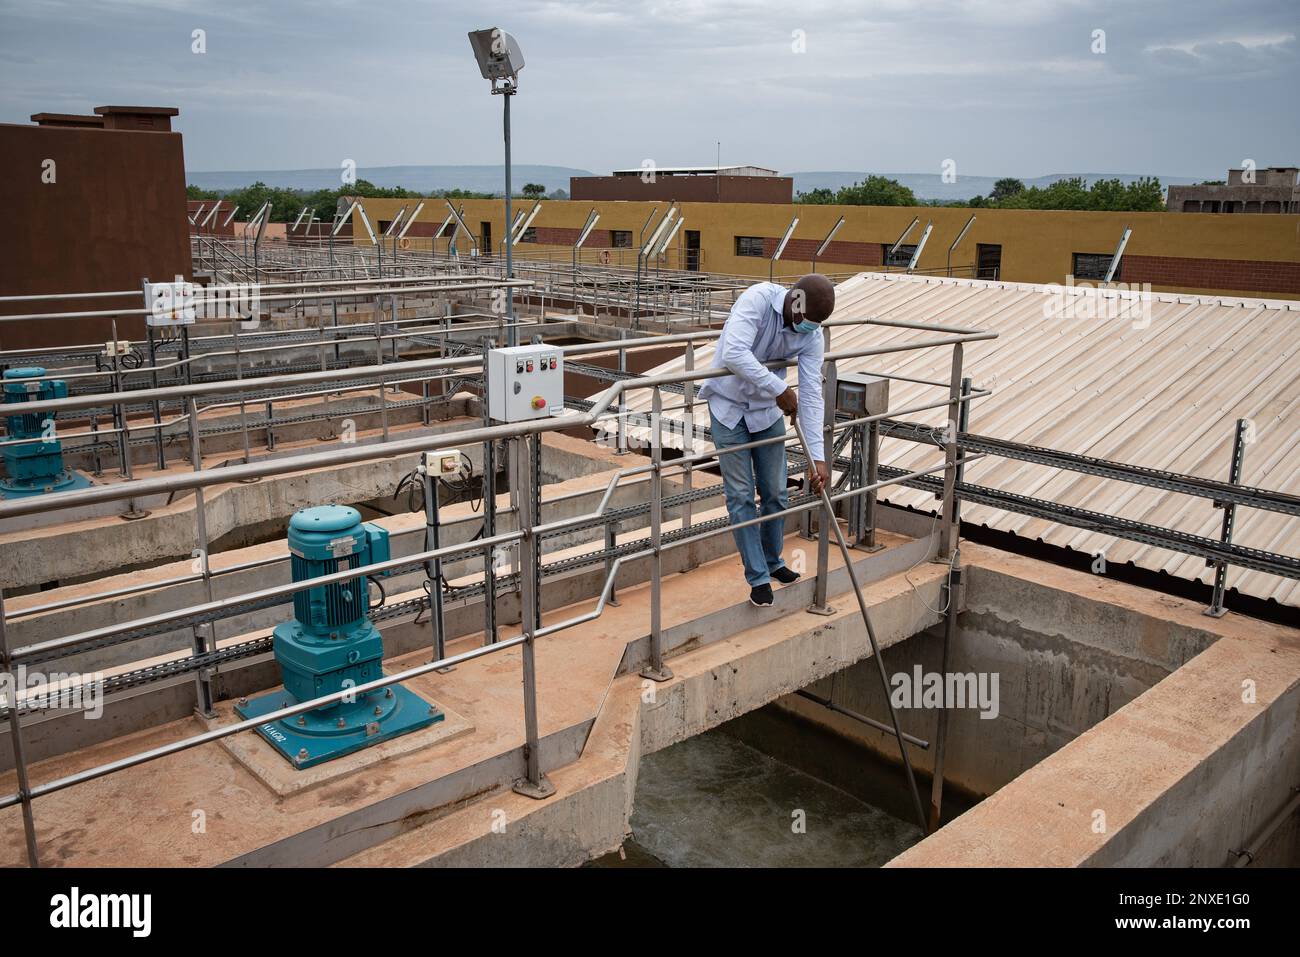 Nicolas Remene / Le Pictorium -  Kabala Niger River water treatment plant. -  19/5/2021  -  Mali / Bamako District / Bamako  -  Kalilou Dem, an engine Stock Photo